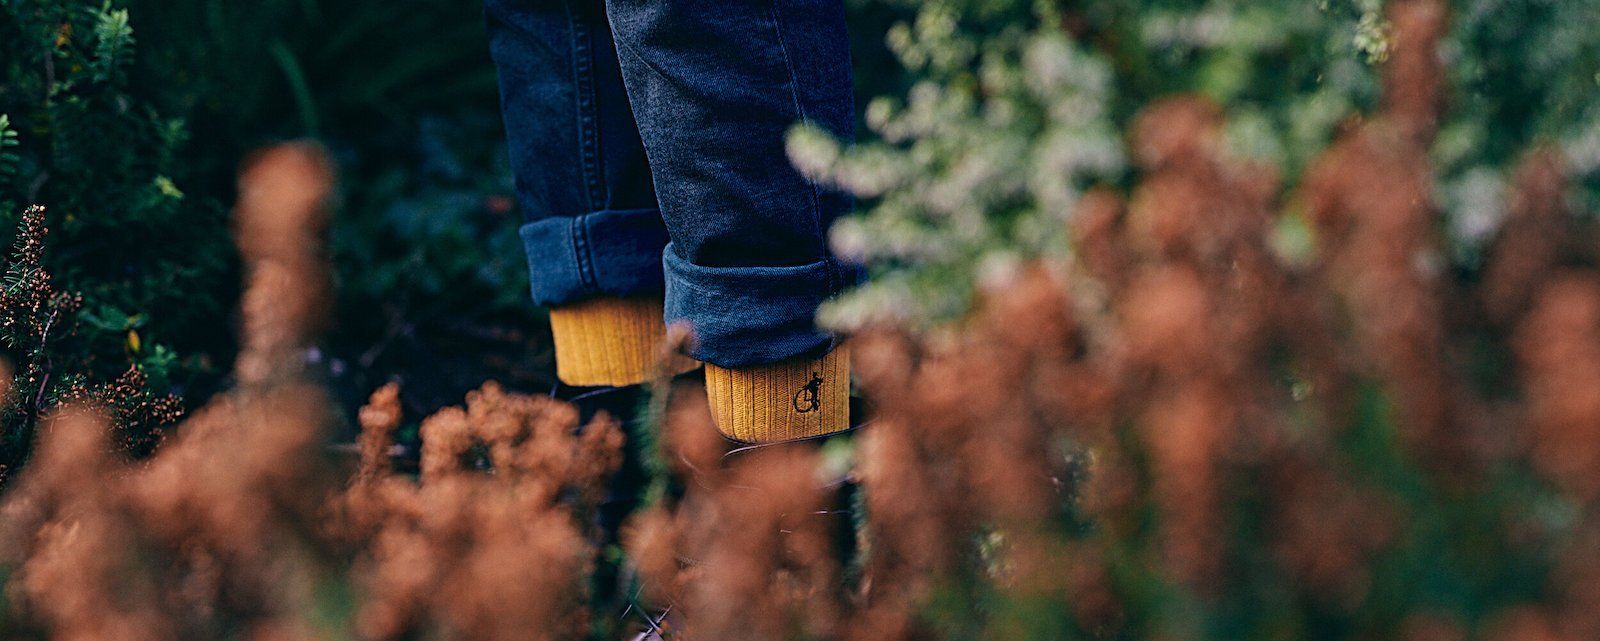 Warm Winter Socks for Men: A Guide